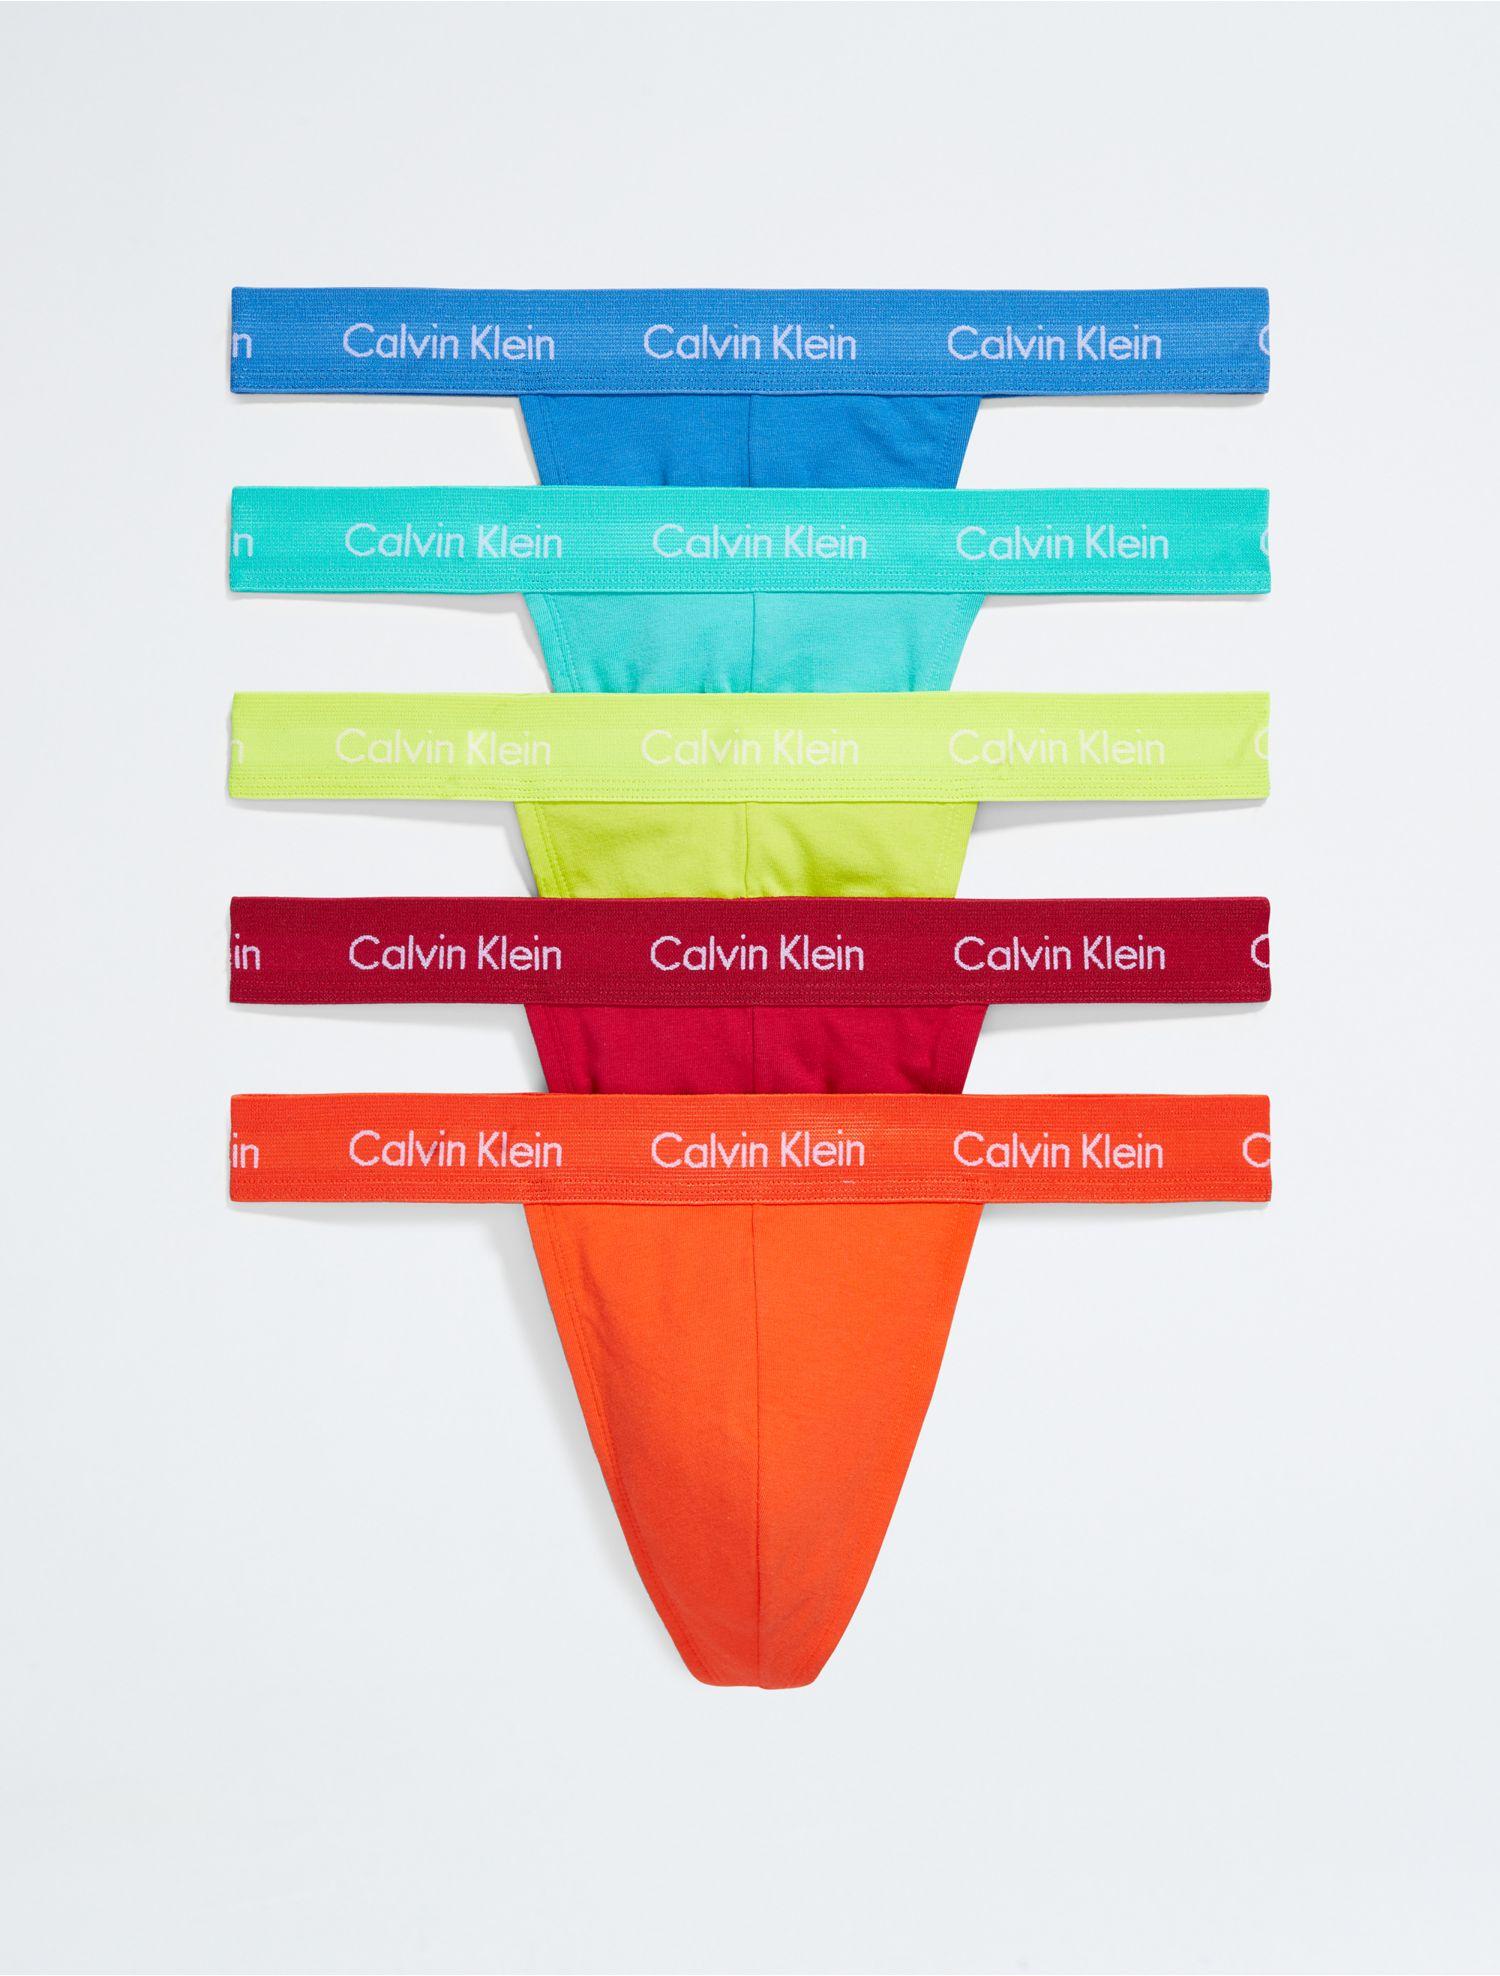 Calvin Klein Cotton Stretch 5-pack Pride Pack Hip Brief for Men